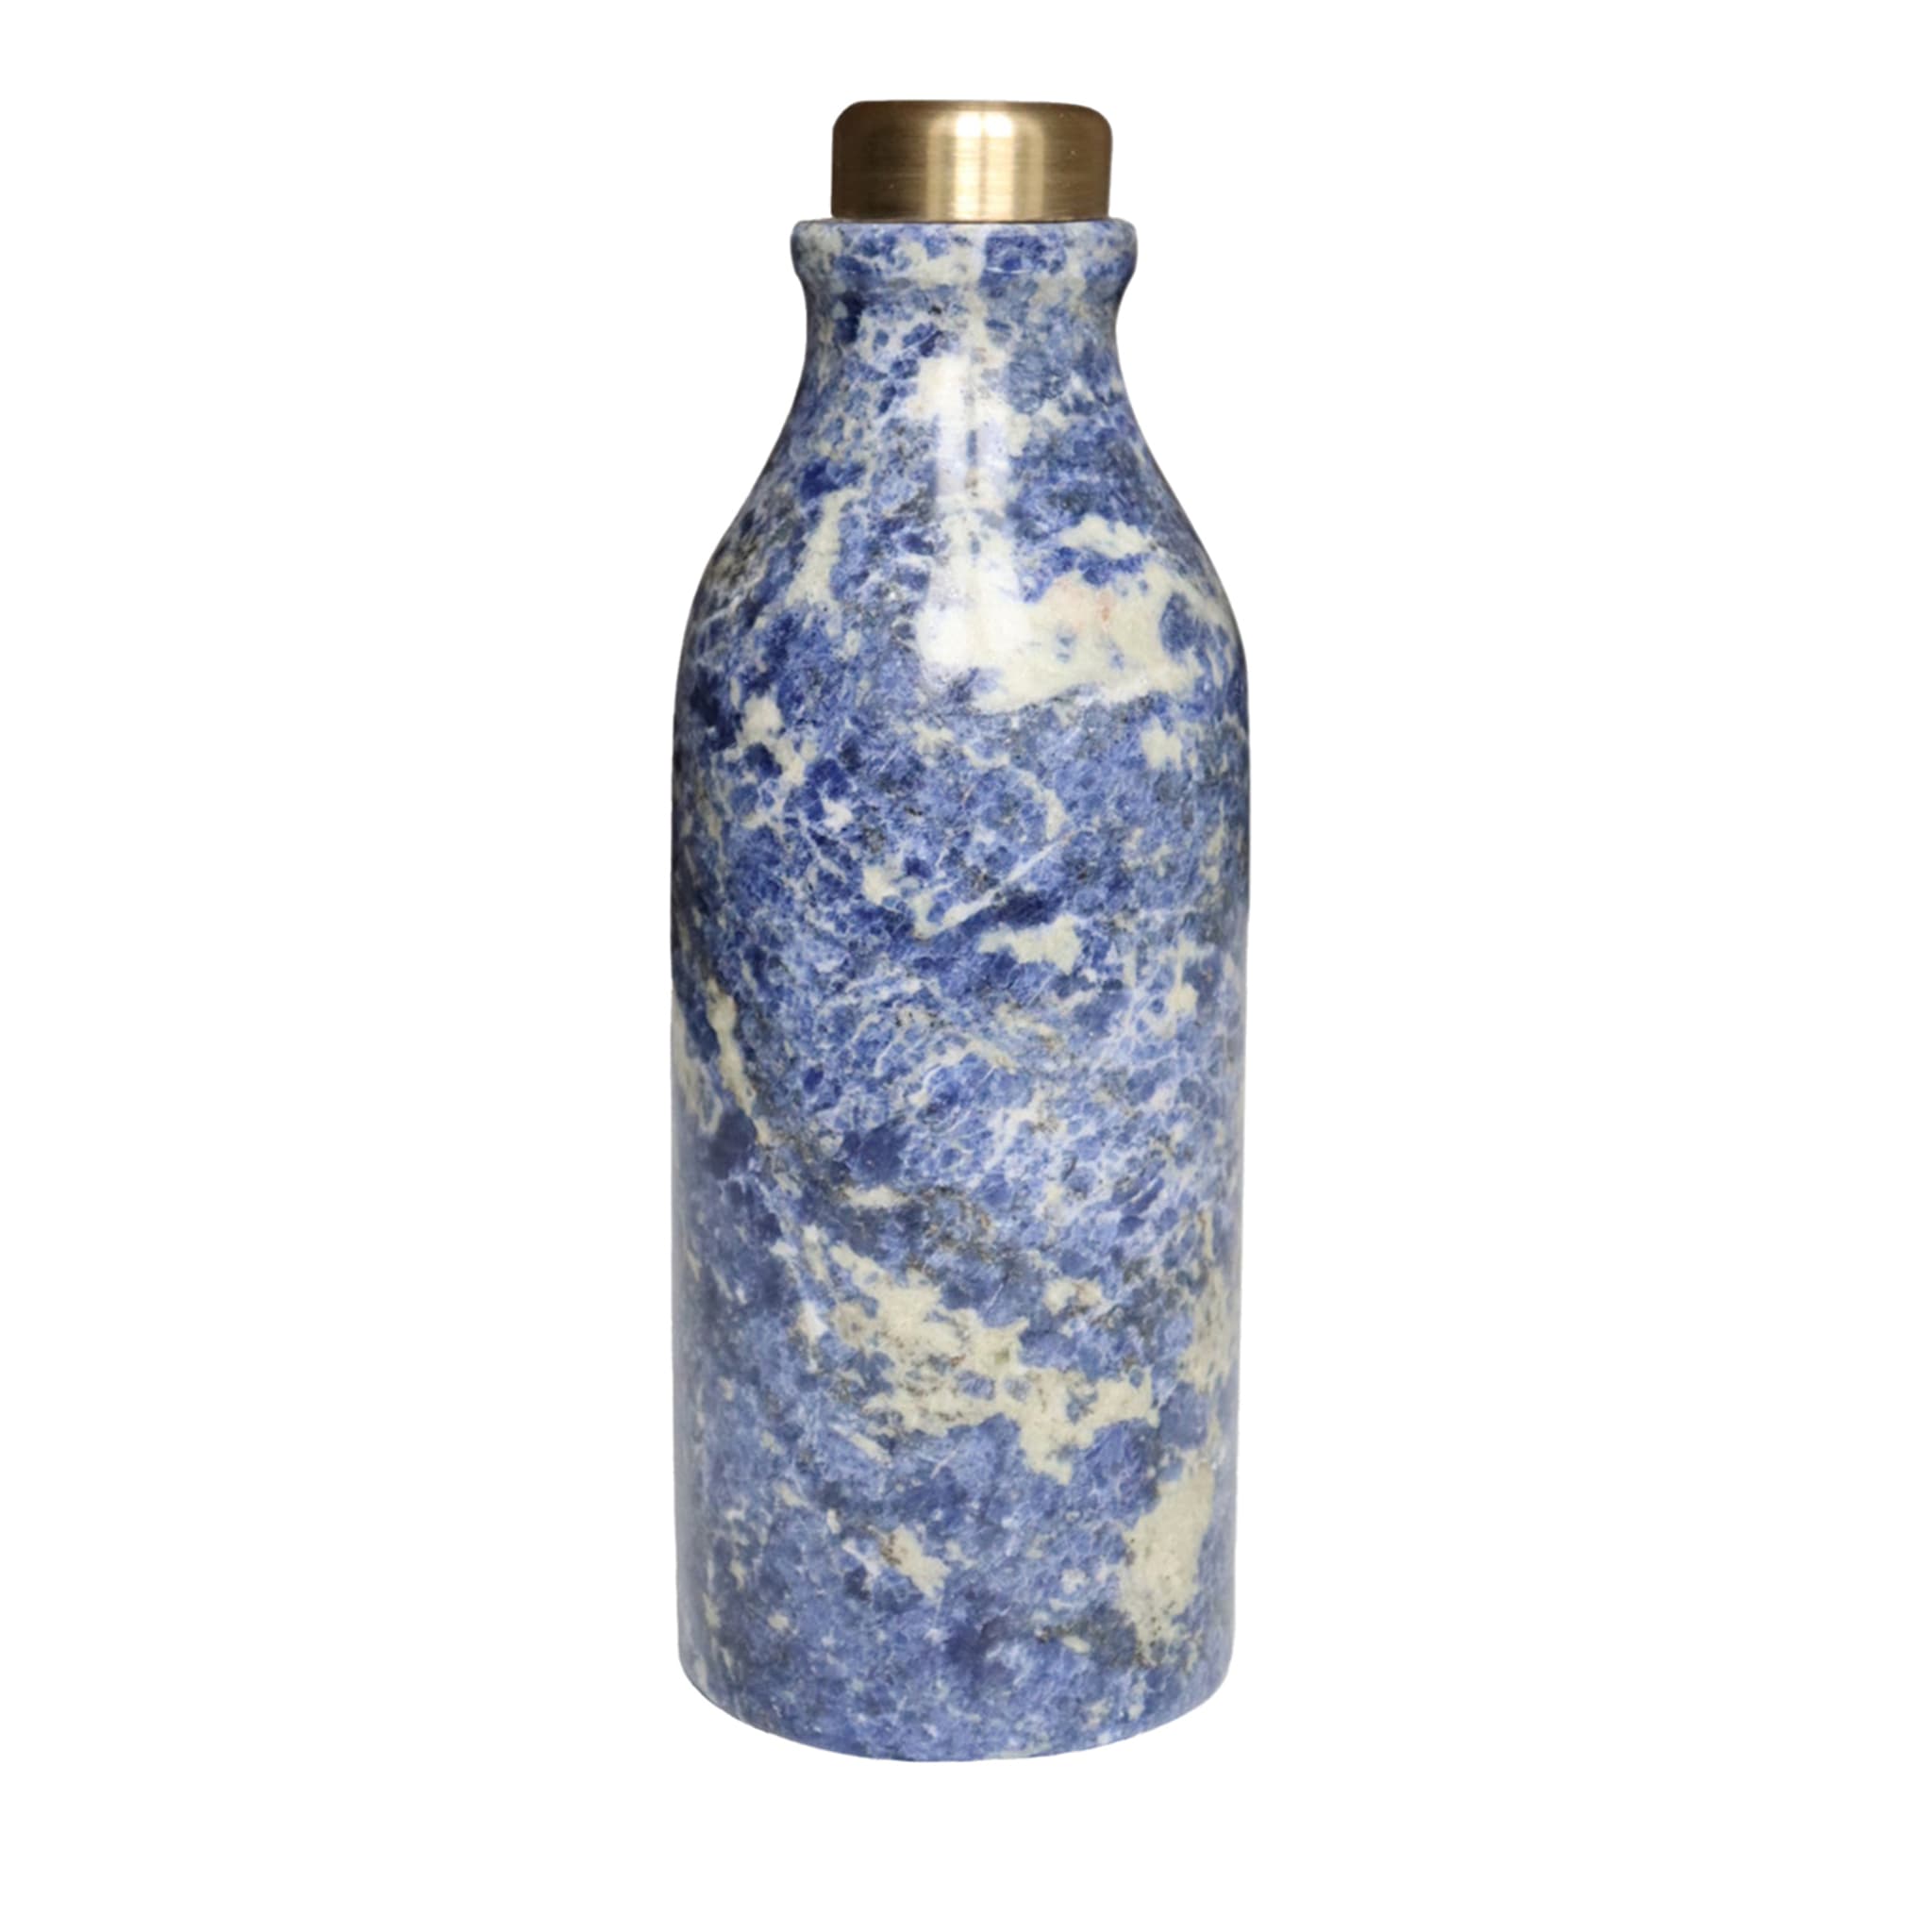 Mr Bottle in Blue Sodalite - Main view